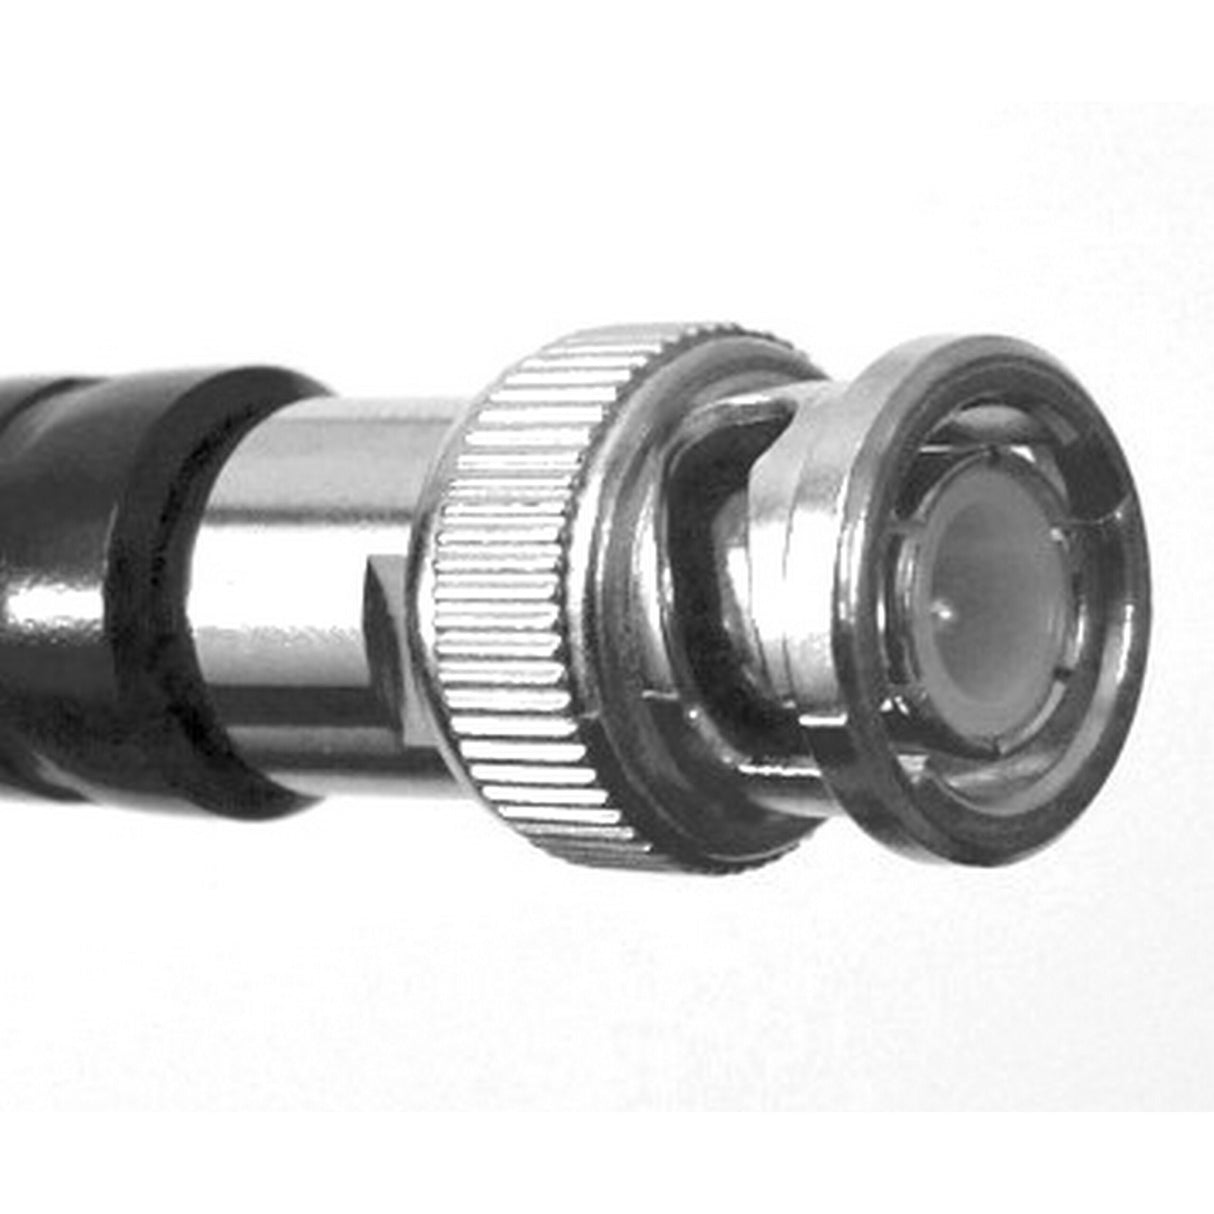 Littlite 12G Low Intensity 12-Inch Gooseneck Light with BNC Connector